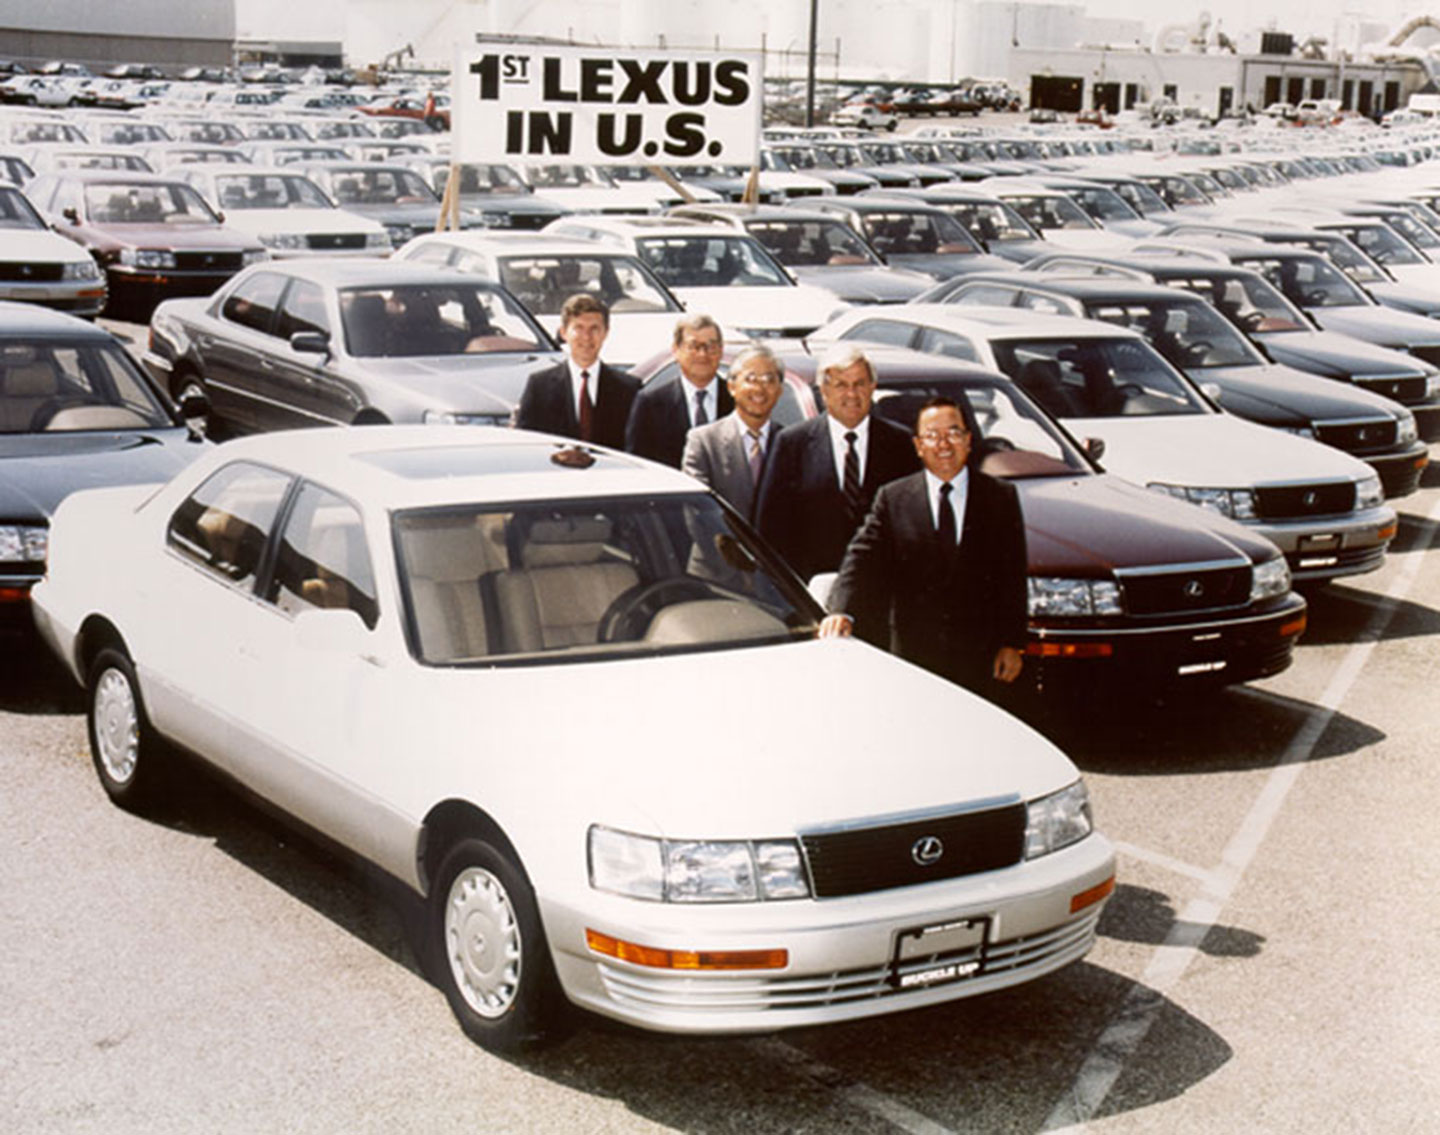 Lexus achieves great success in the US